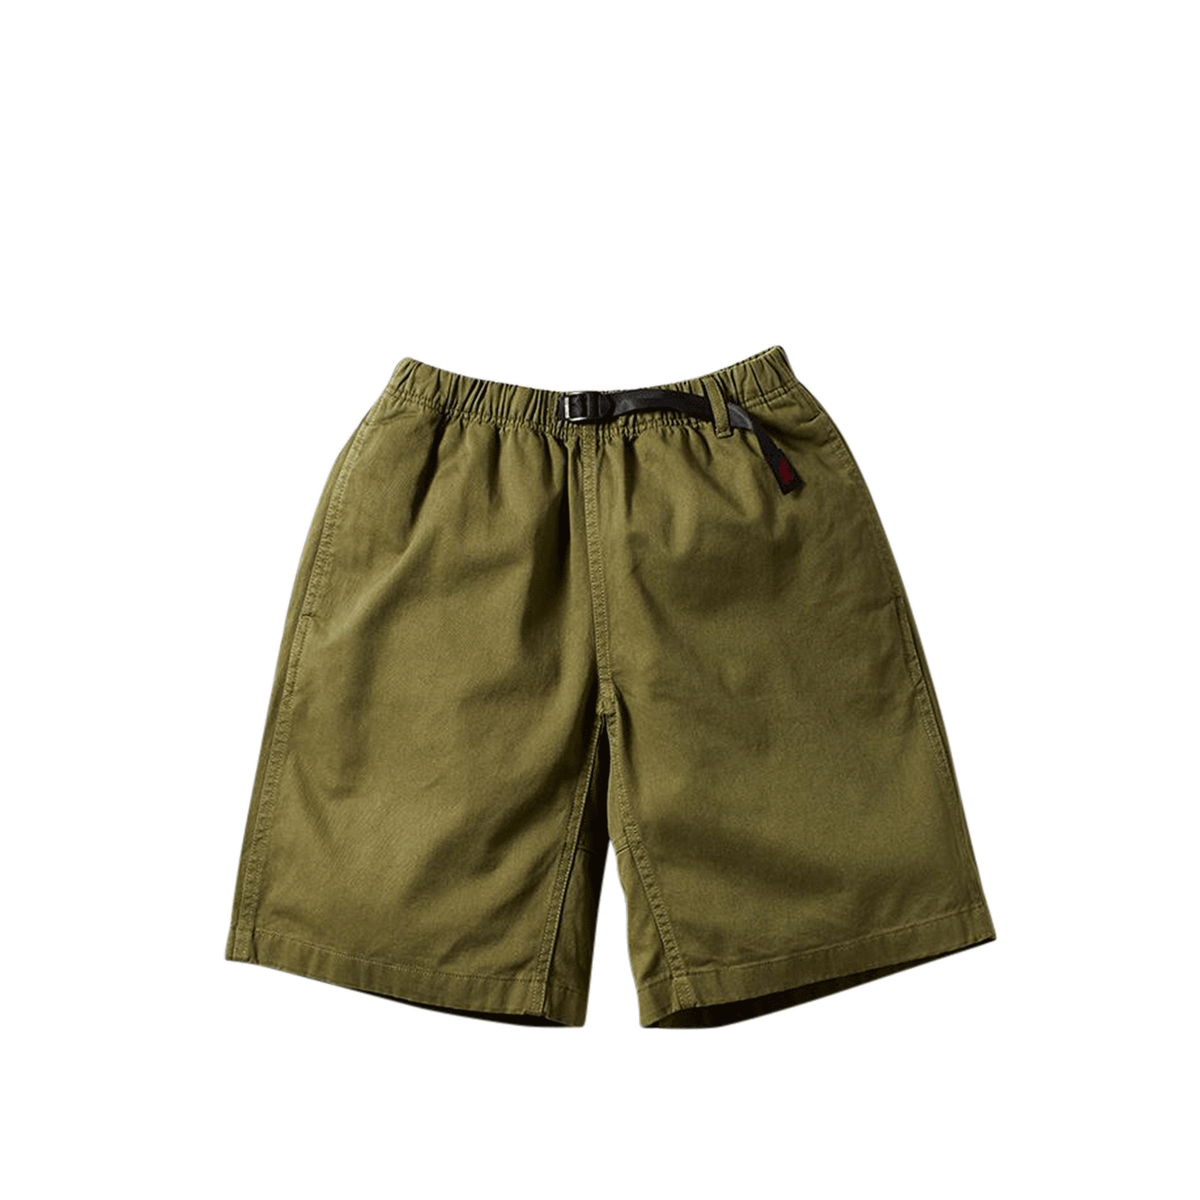 G-Shorts - Olive